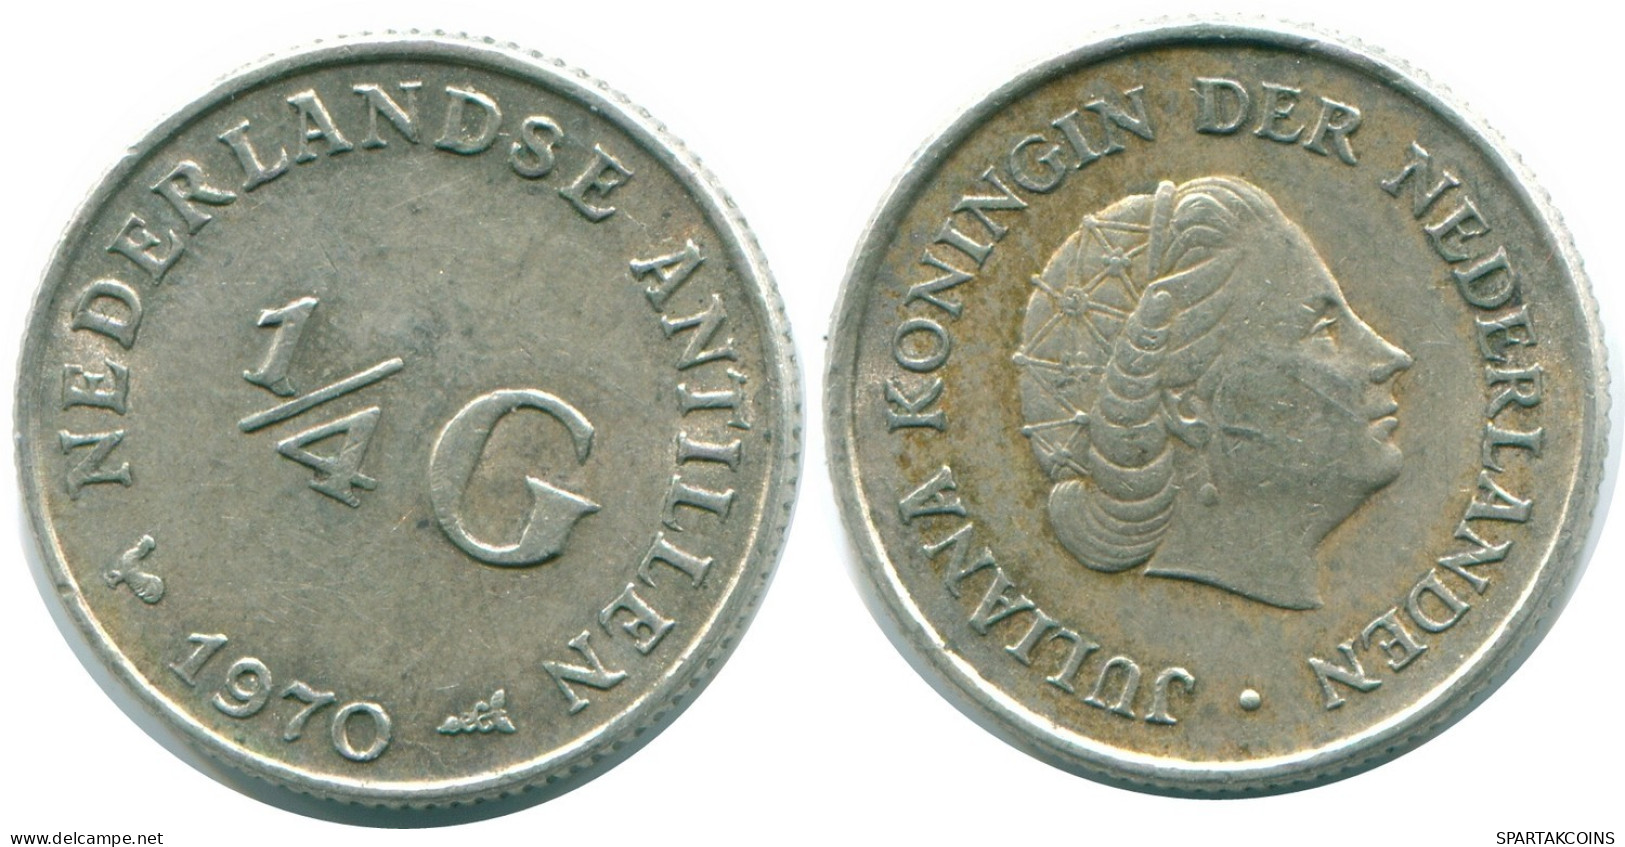 1/4 GULDEN 1970 NETHERLANDS ANTILLES SILVER Colonial Coin #NL11688.4.U.A - Antille Olandesi